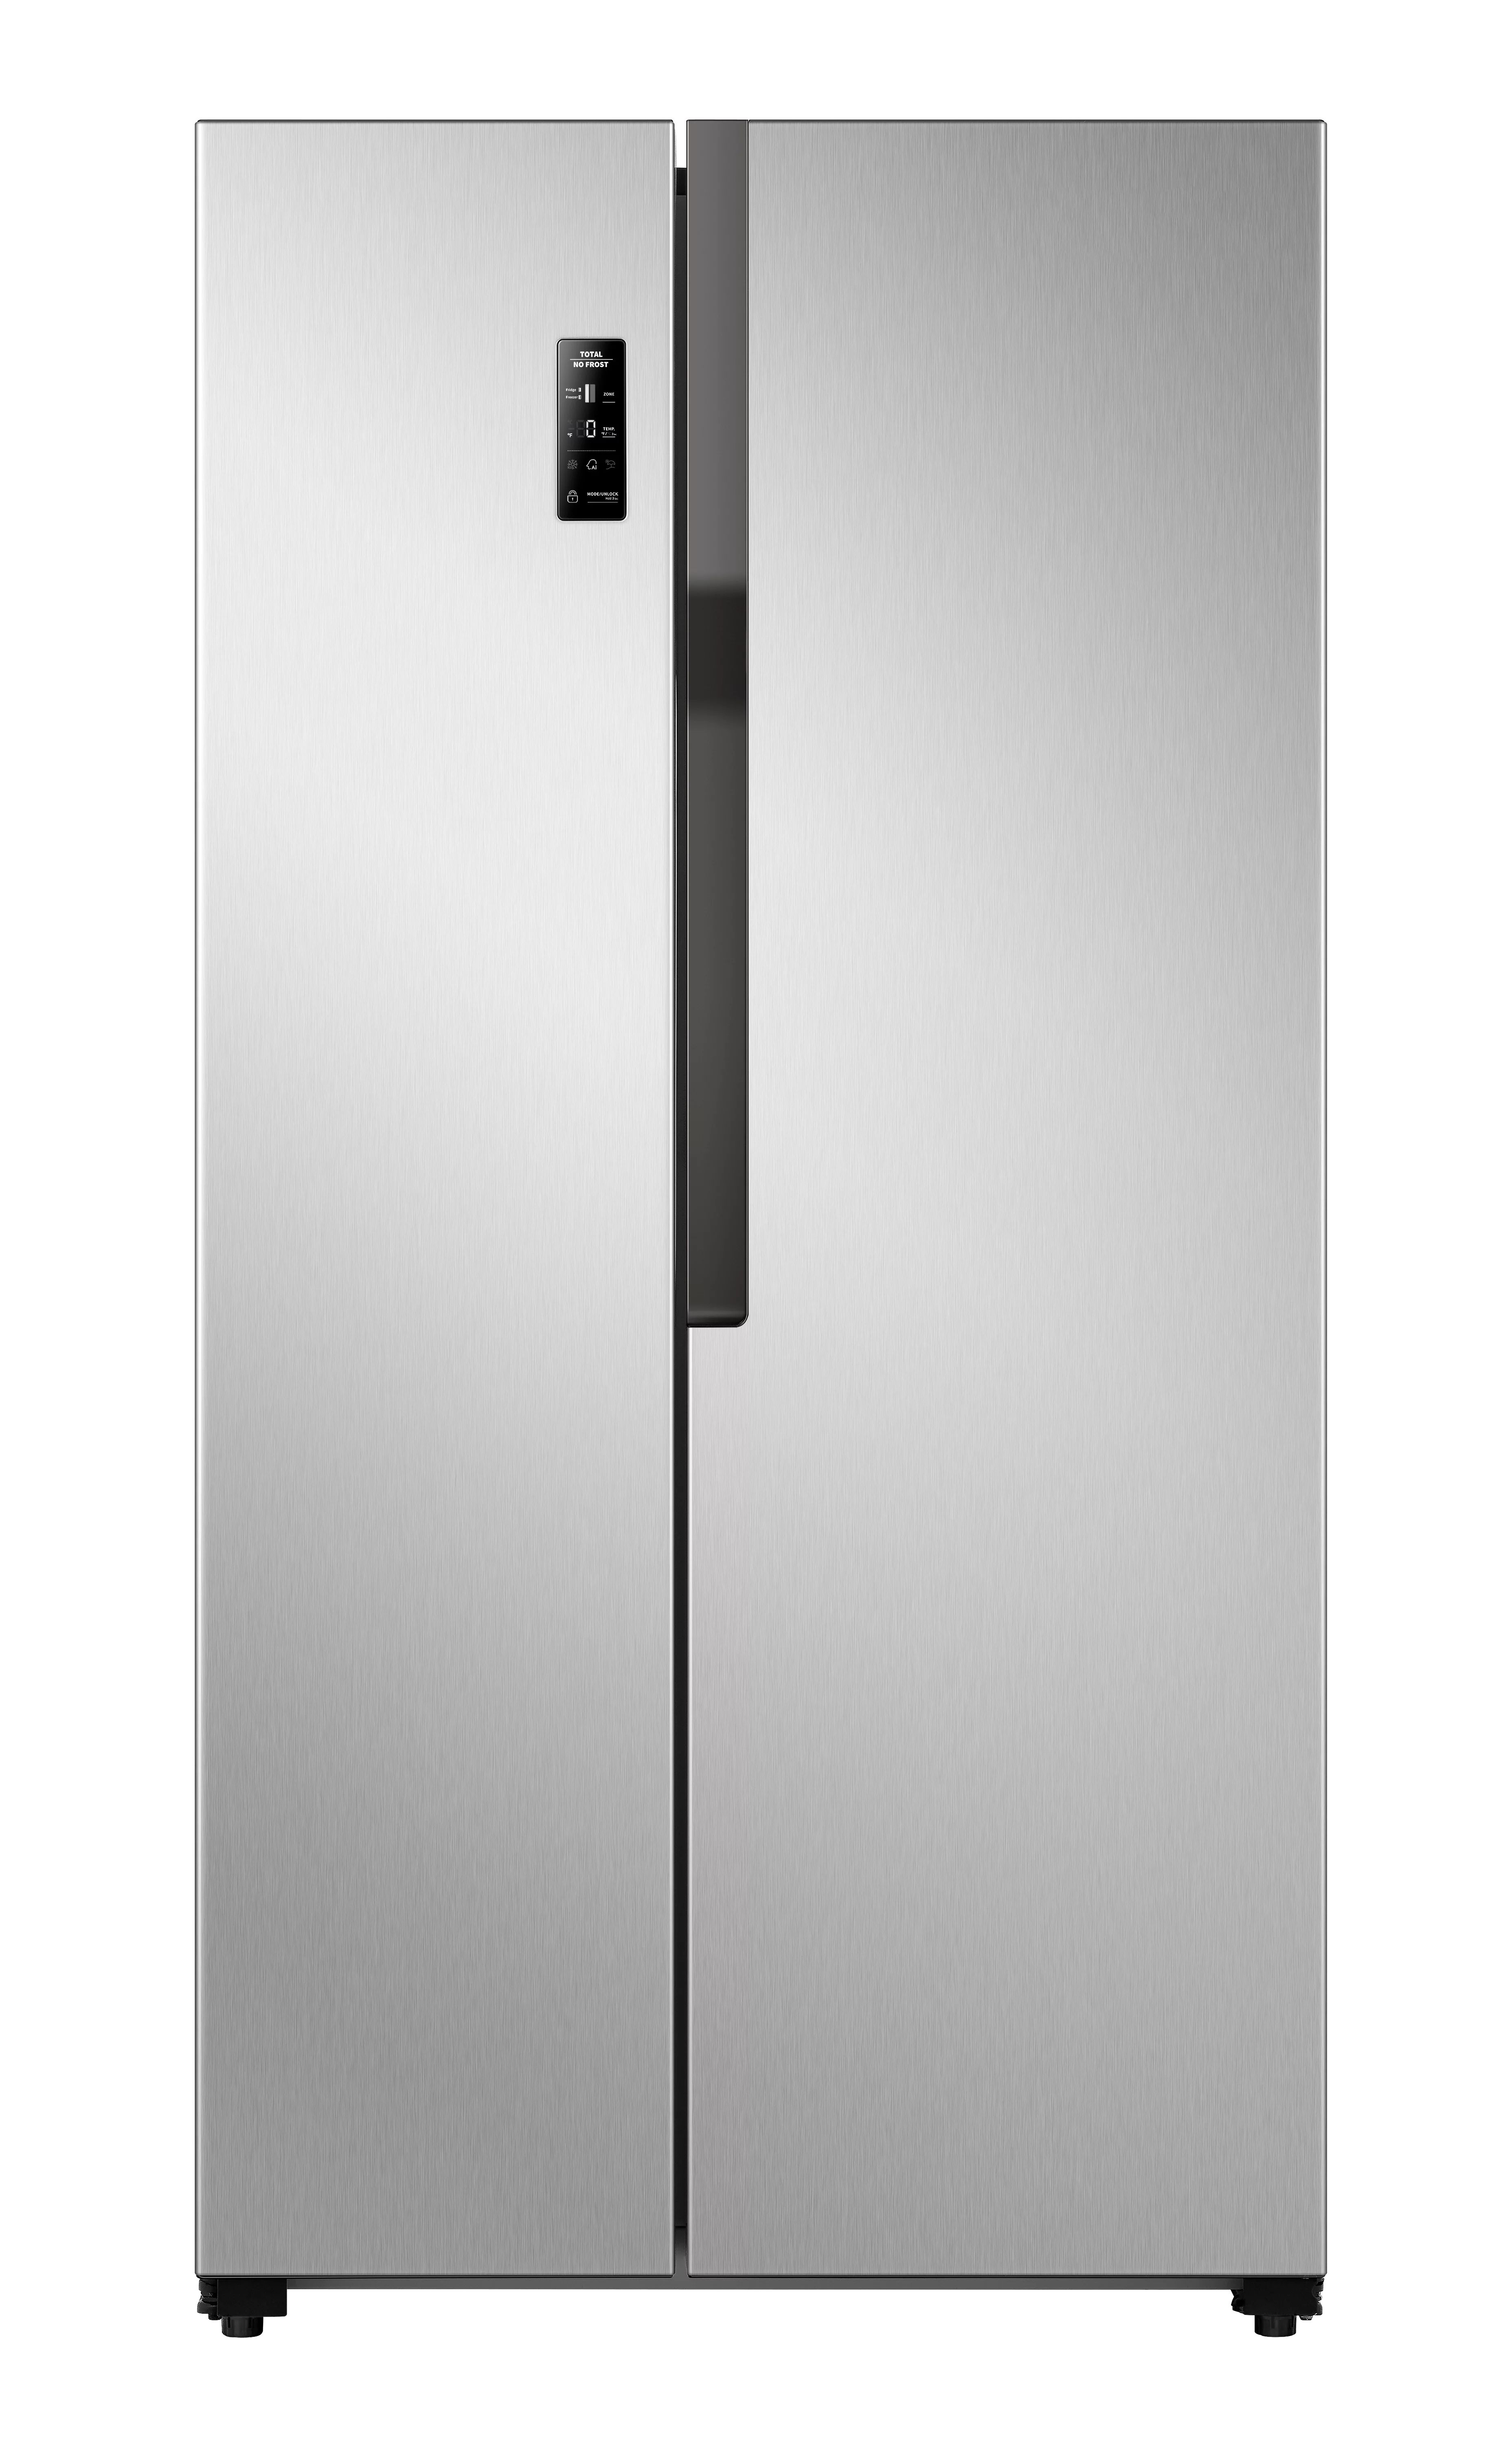 Mora 19 CF Capacity Side by Side Refrigerator Metallic Steel Silver Model MRS184N6AVD | Walmart (US)